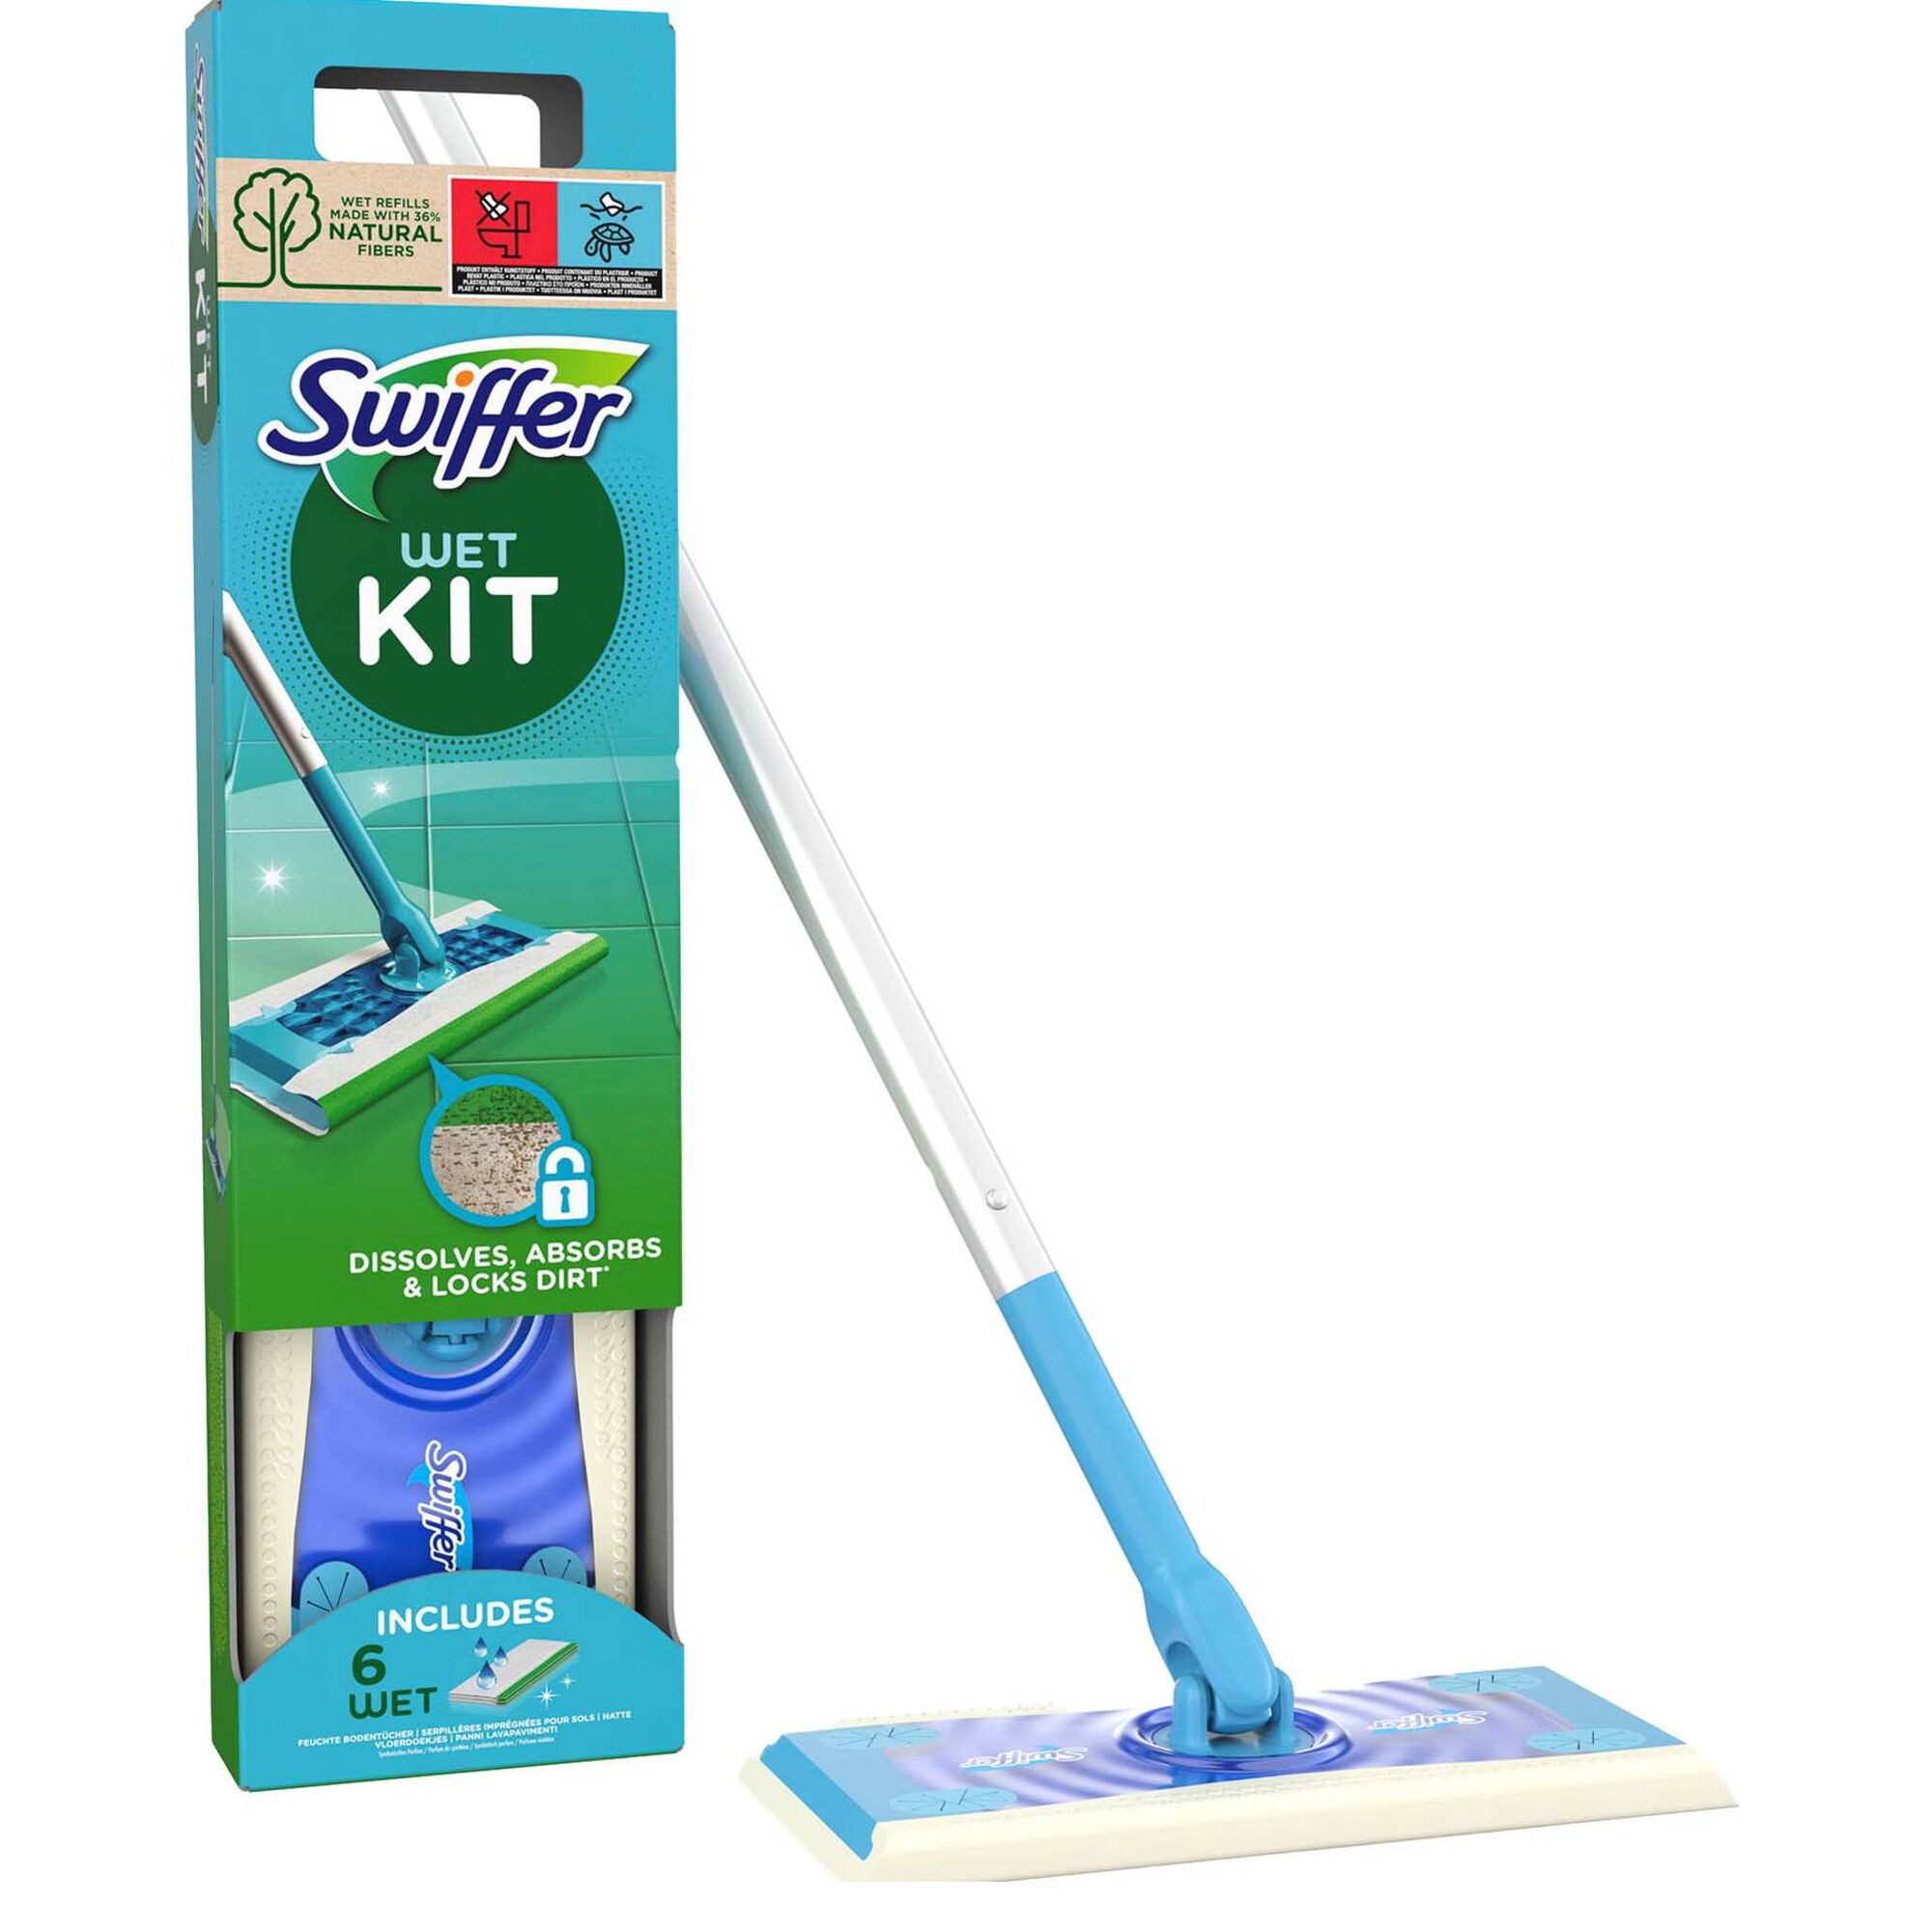 Mopa Sweeper Kit com 1 Mopa e 6 Recargas Húmidas - 1 kit - Swiffer